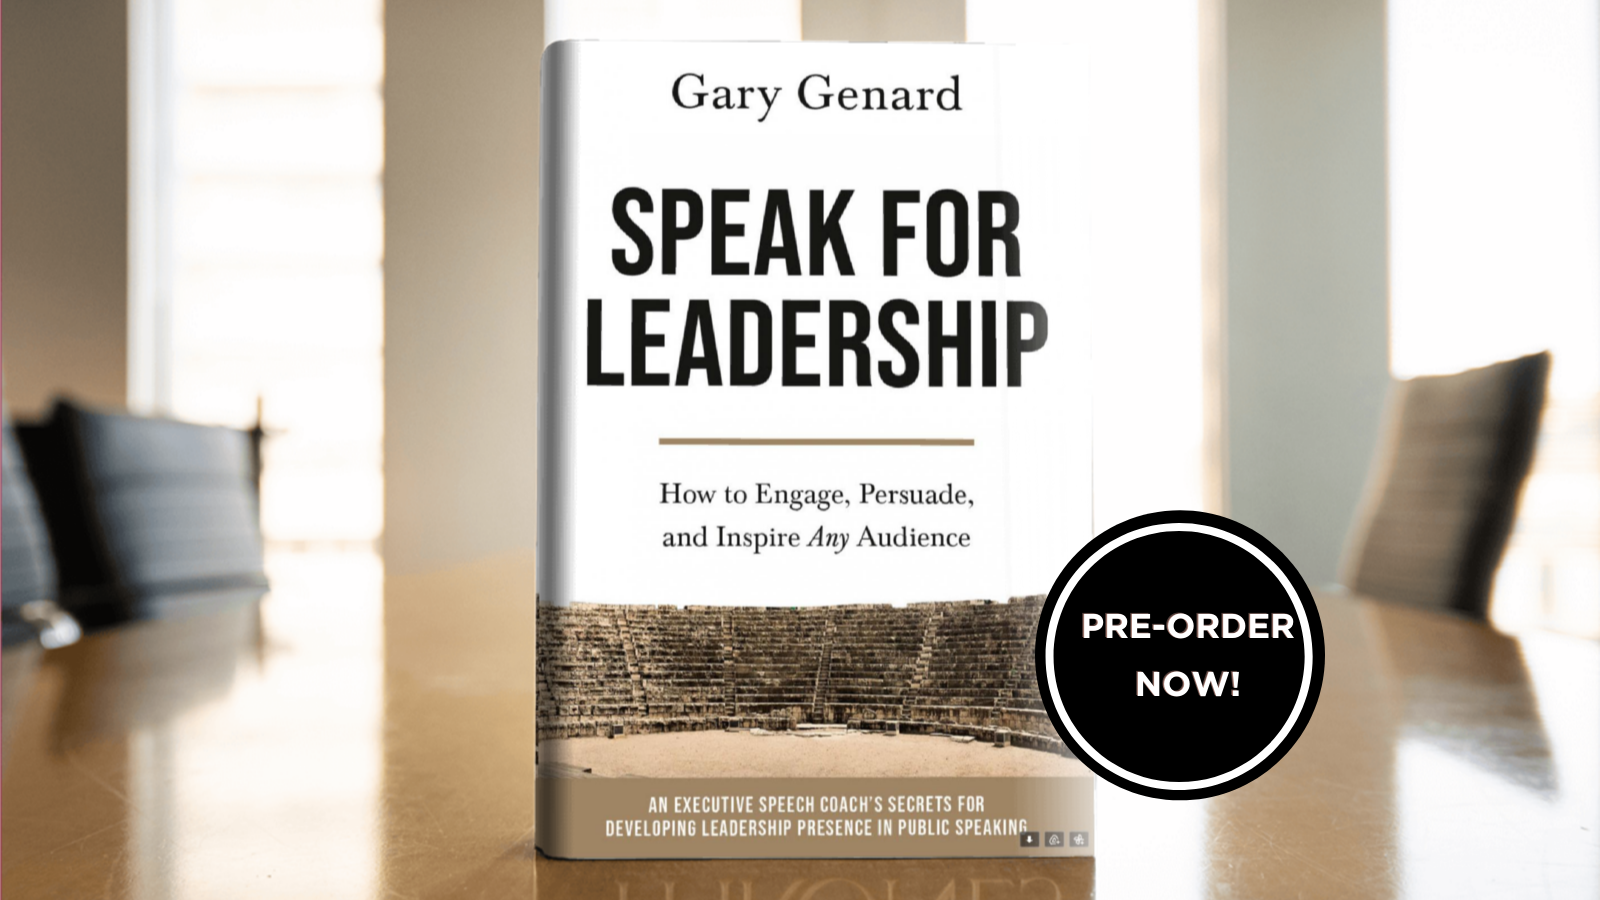 Dr. Gary Genard's book on executive presence in public speaking, Speak for Leadership.